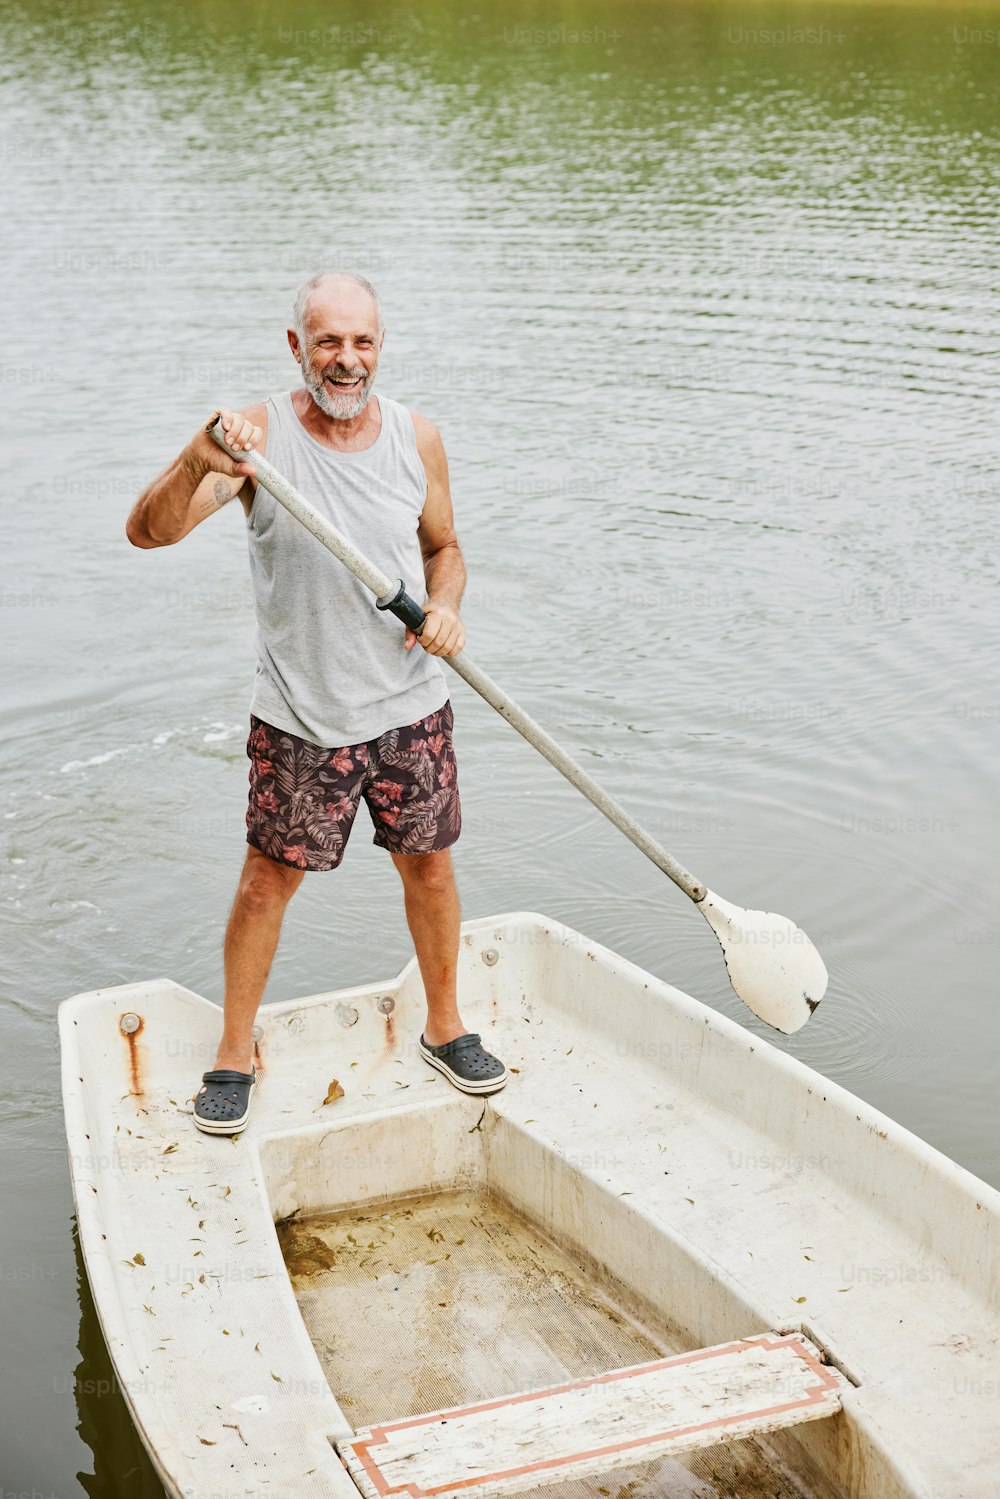 Un uomo in piedi su una barca con una pagaia